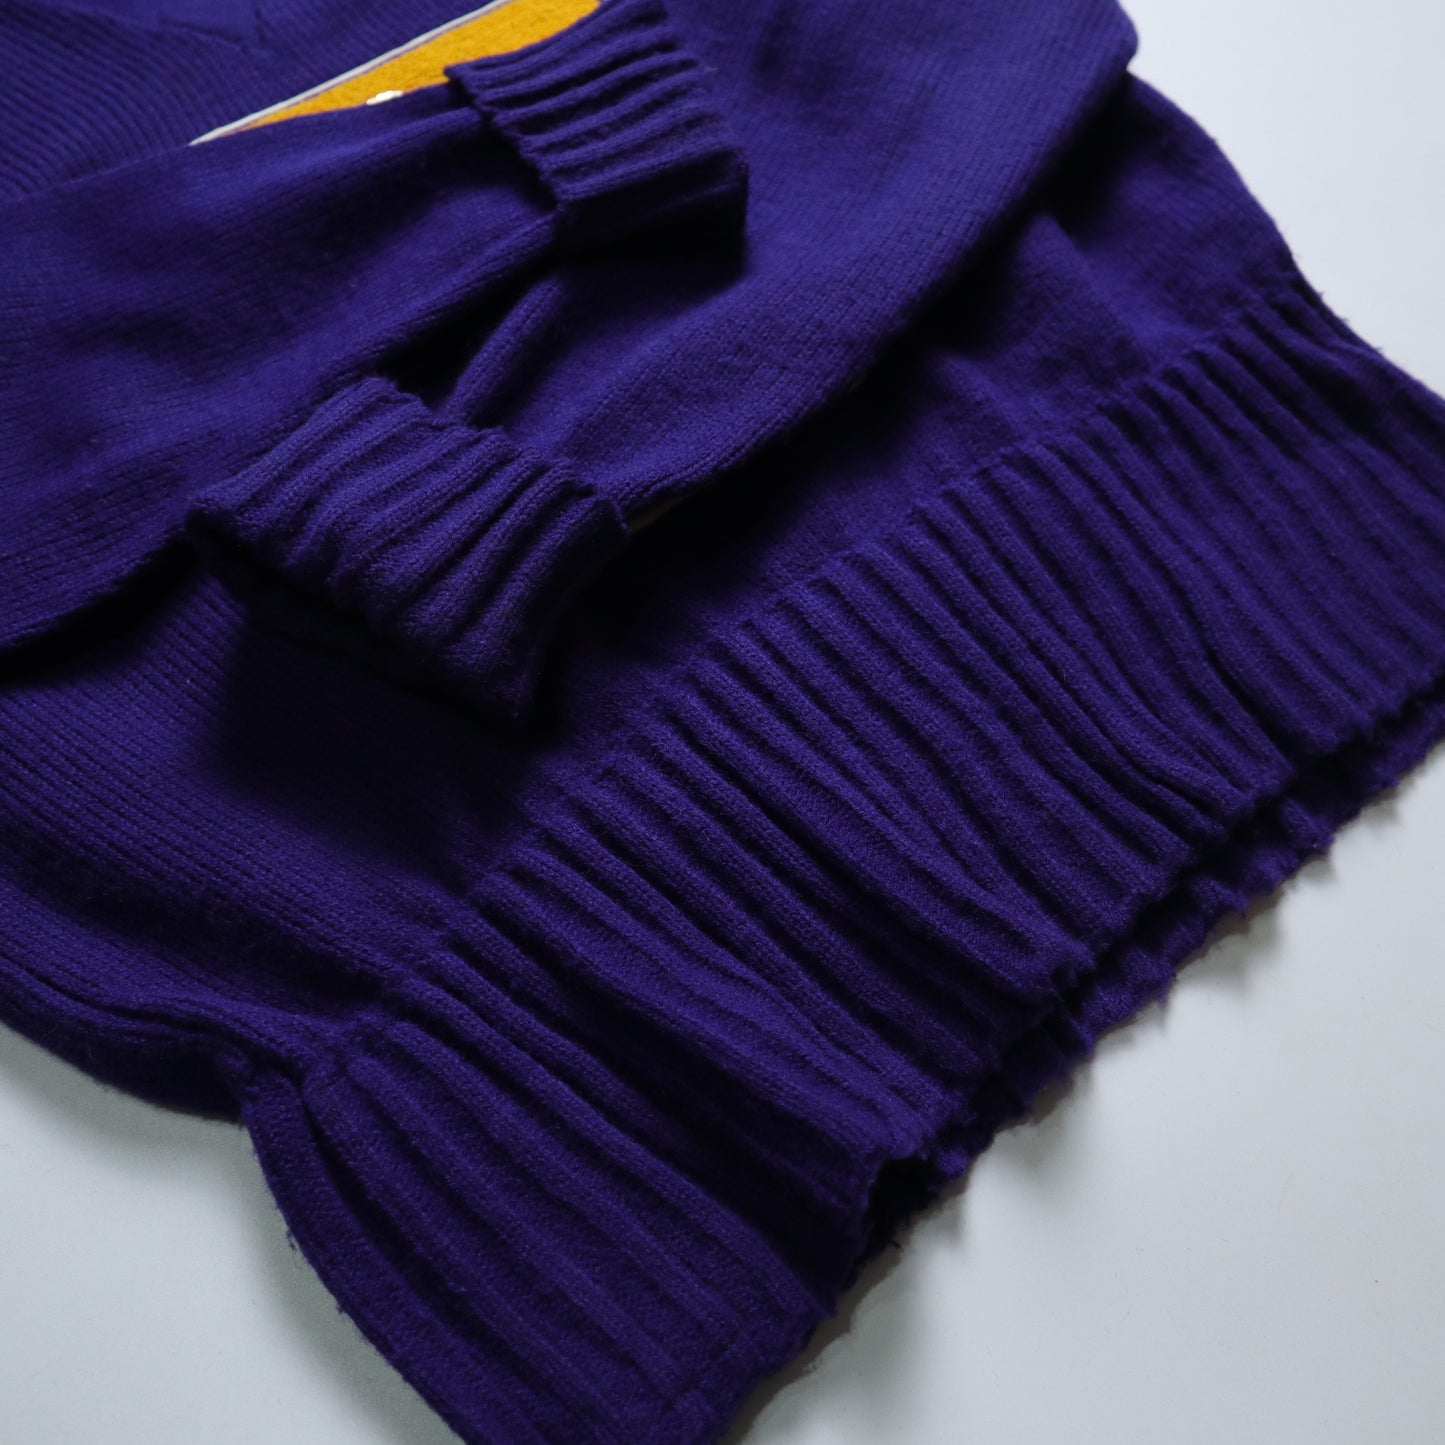 1970s Varsity Sweater patch”T” 紫色V領校園針織衫